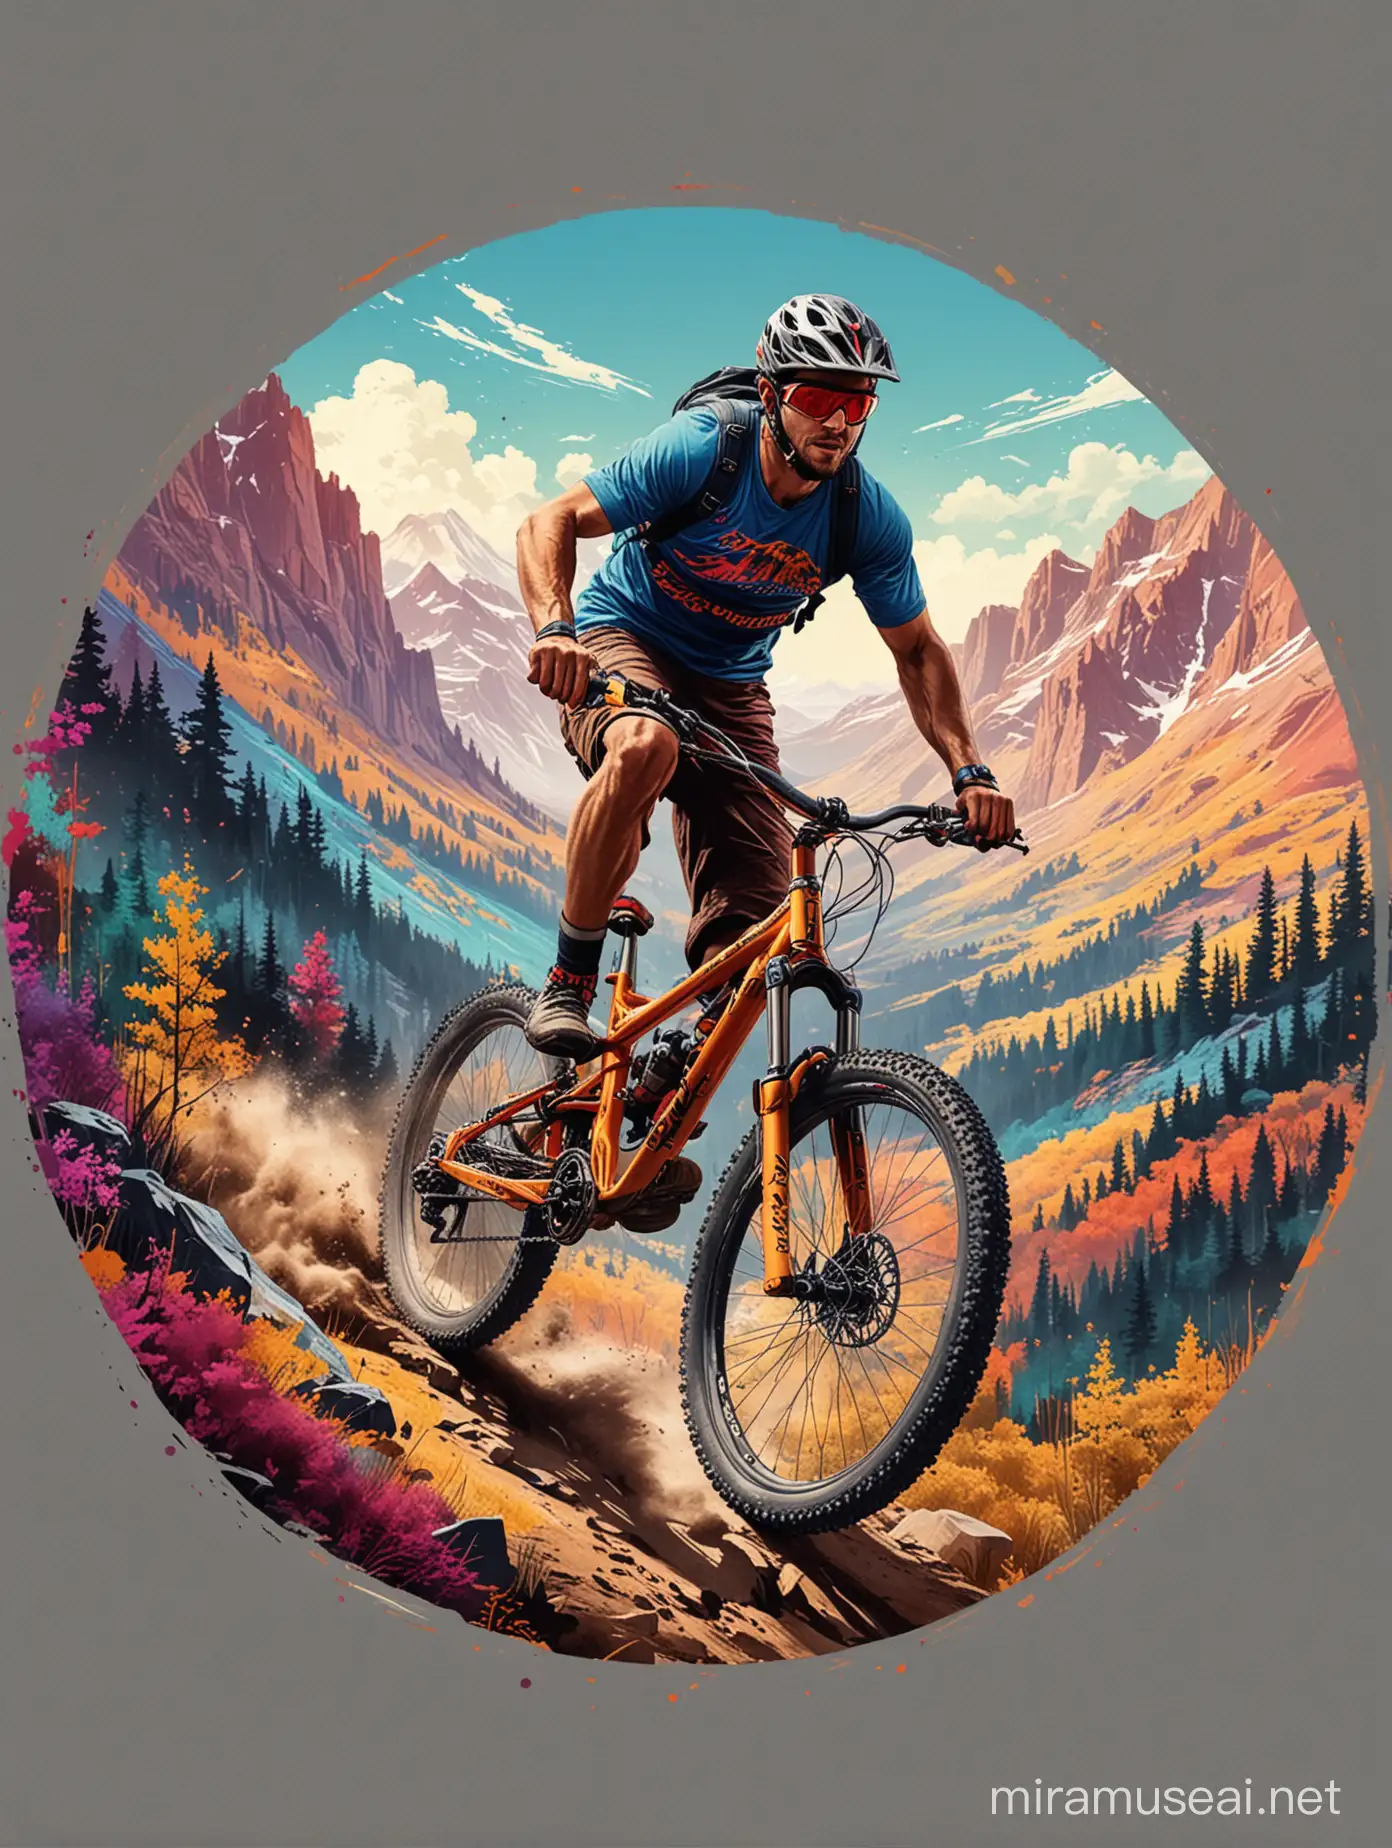 aiartbroker_Create_an_exhilarating_t-shirt_design_capturing_a_mountain_bike_rider_300dpi_circular, colorful